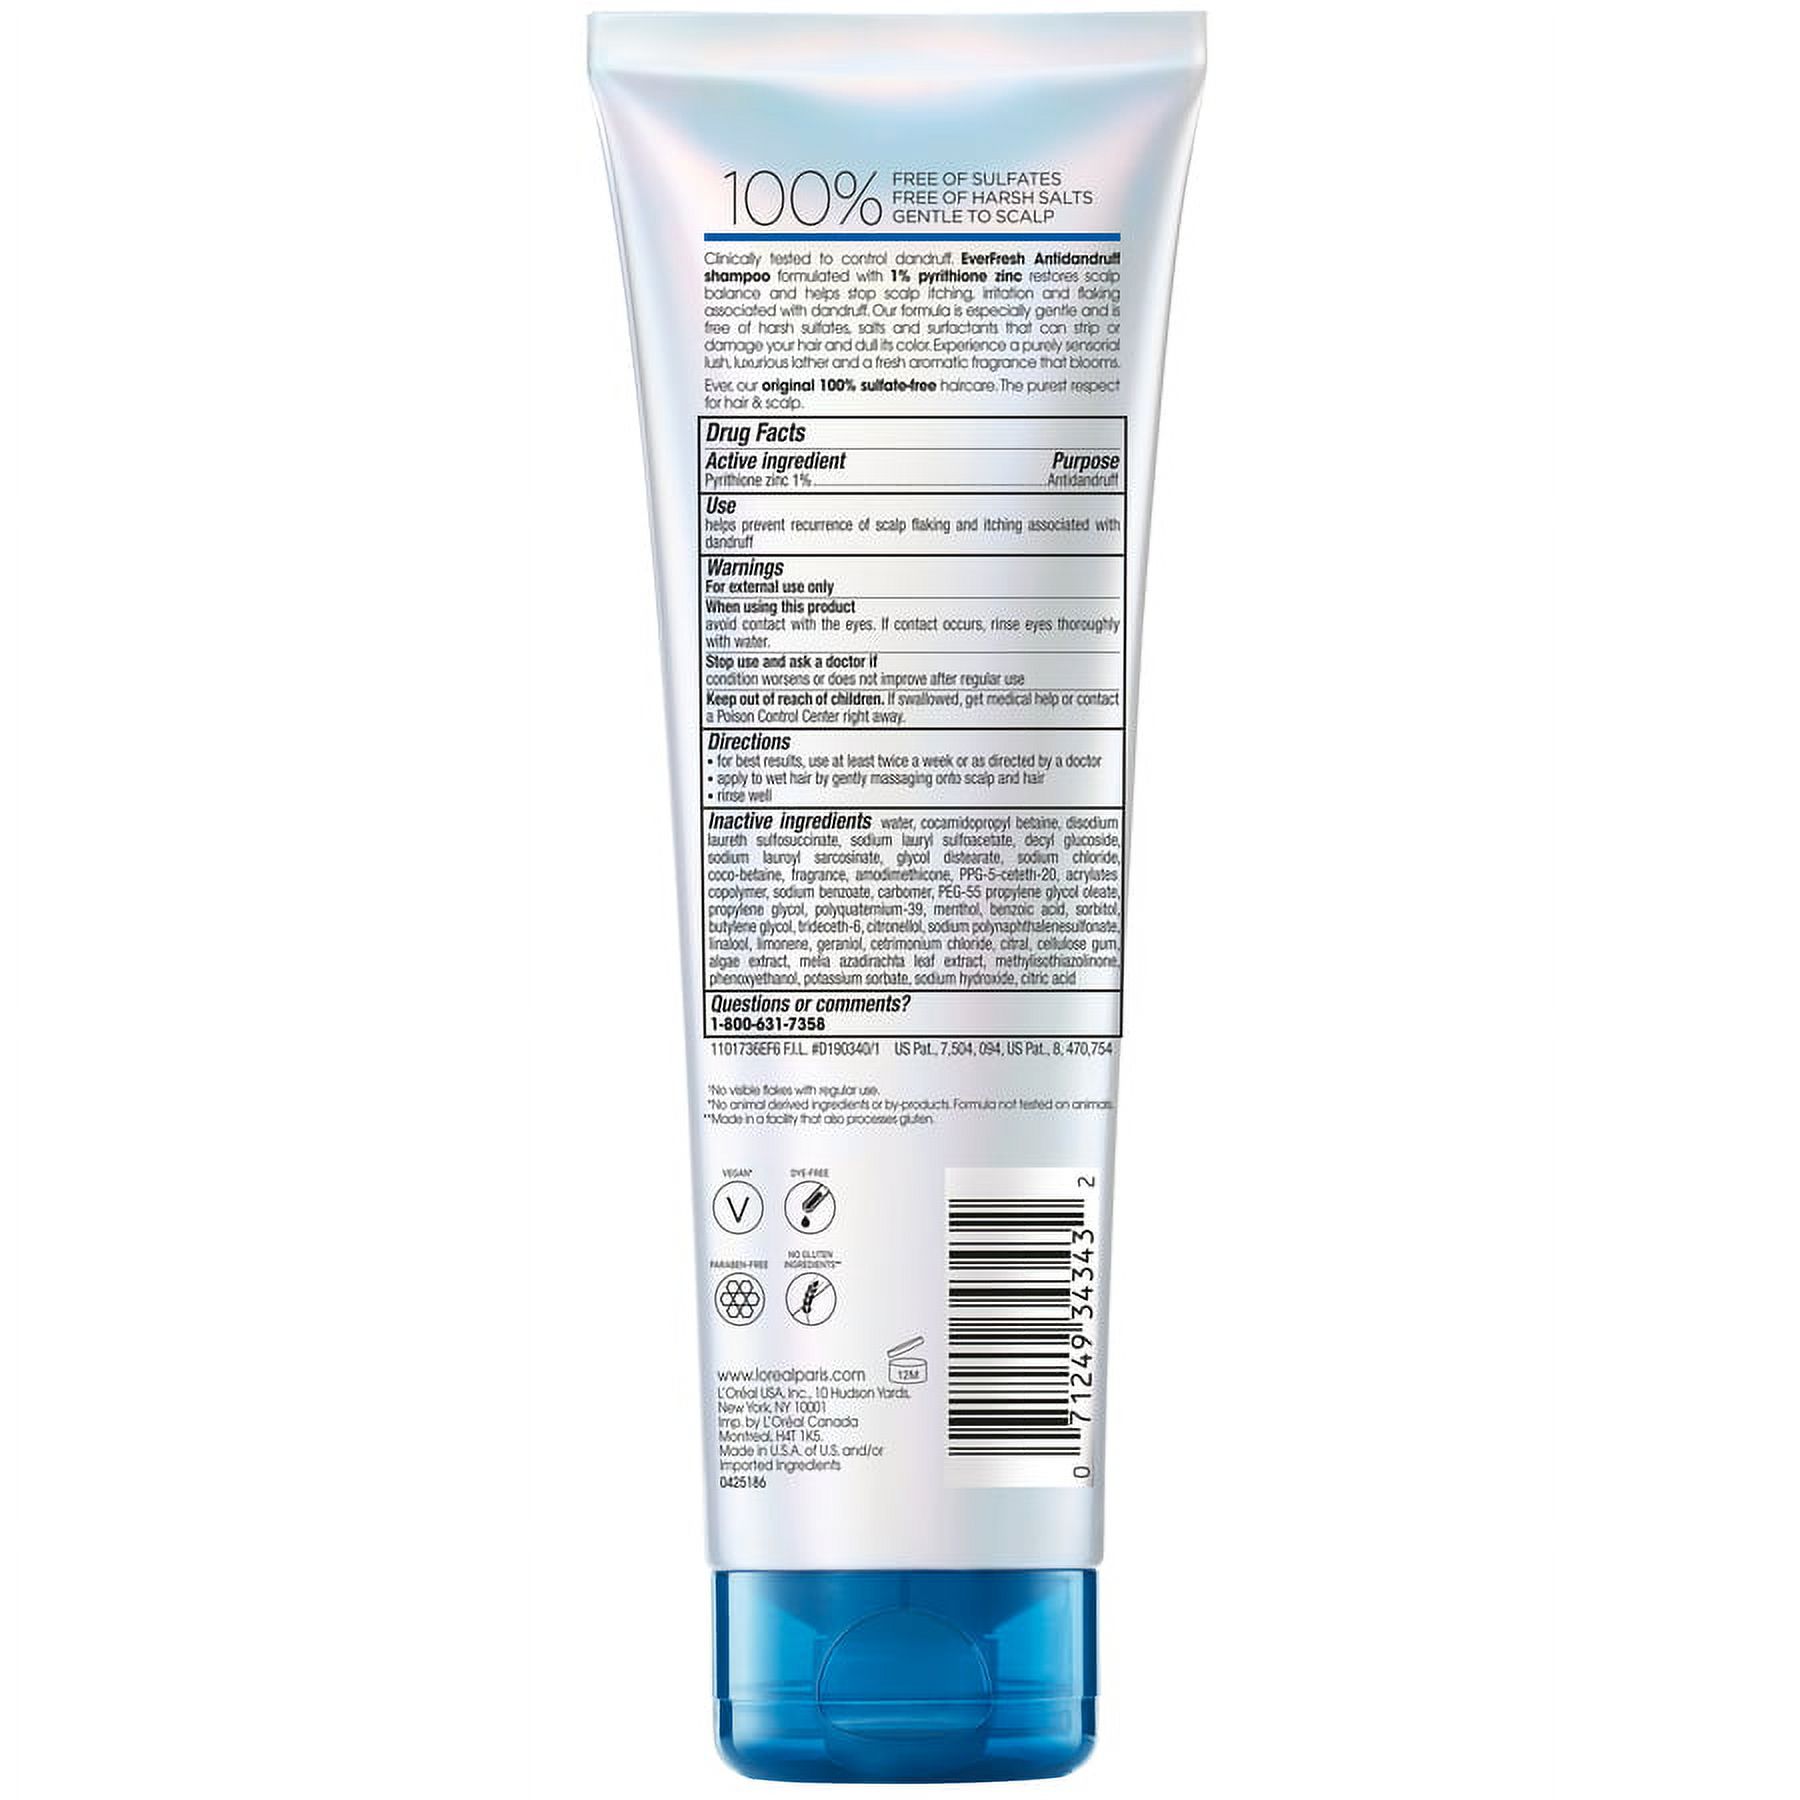 L'Oreal Paris EverFresh Antidandruff Shampoo Sulfate Free, 8.5 fl. oz. - image 2 of 5